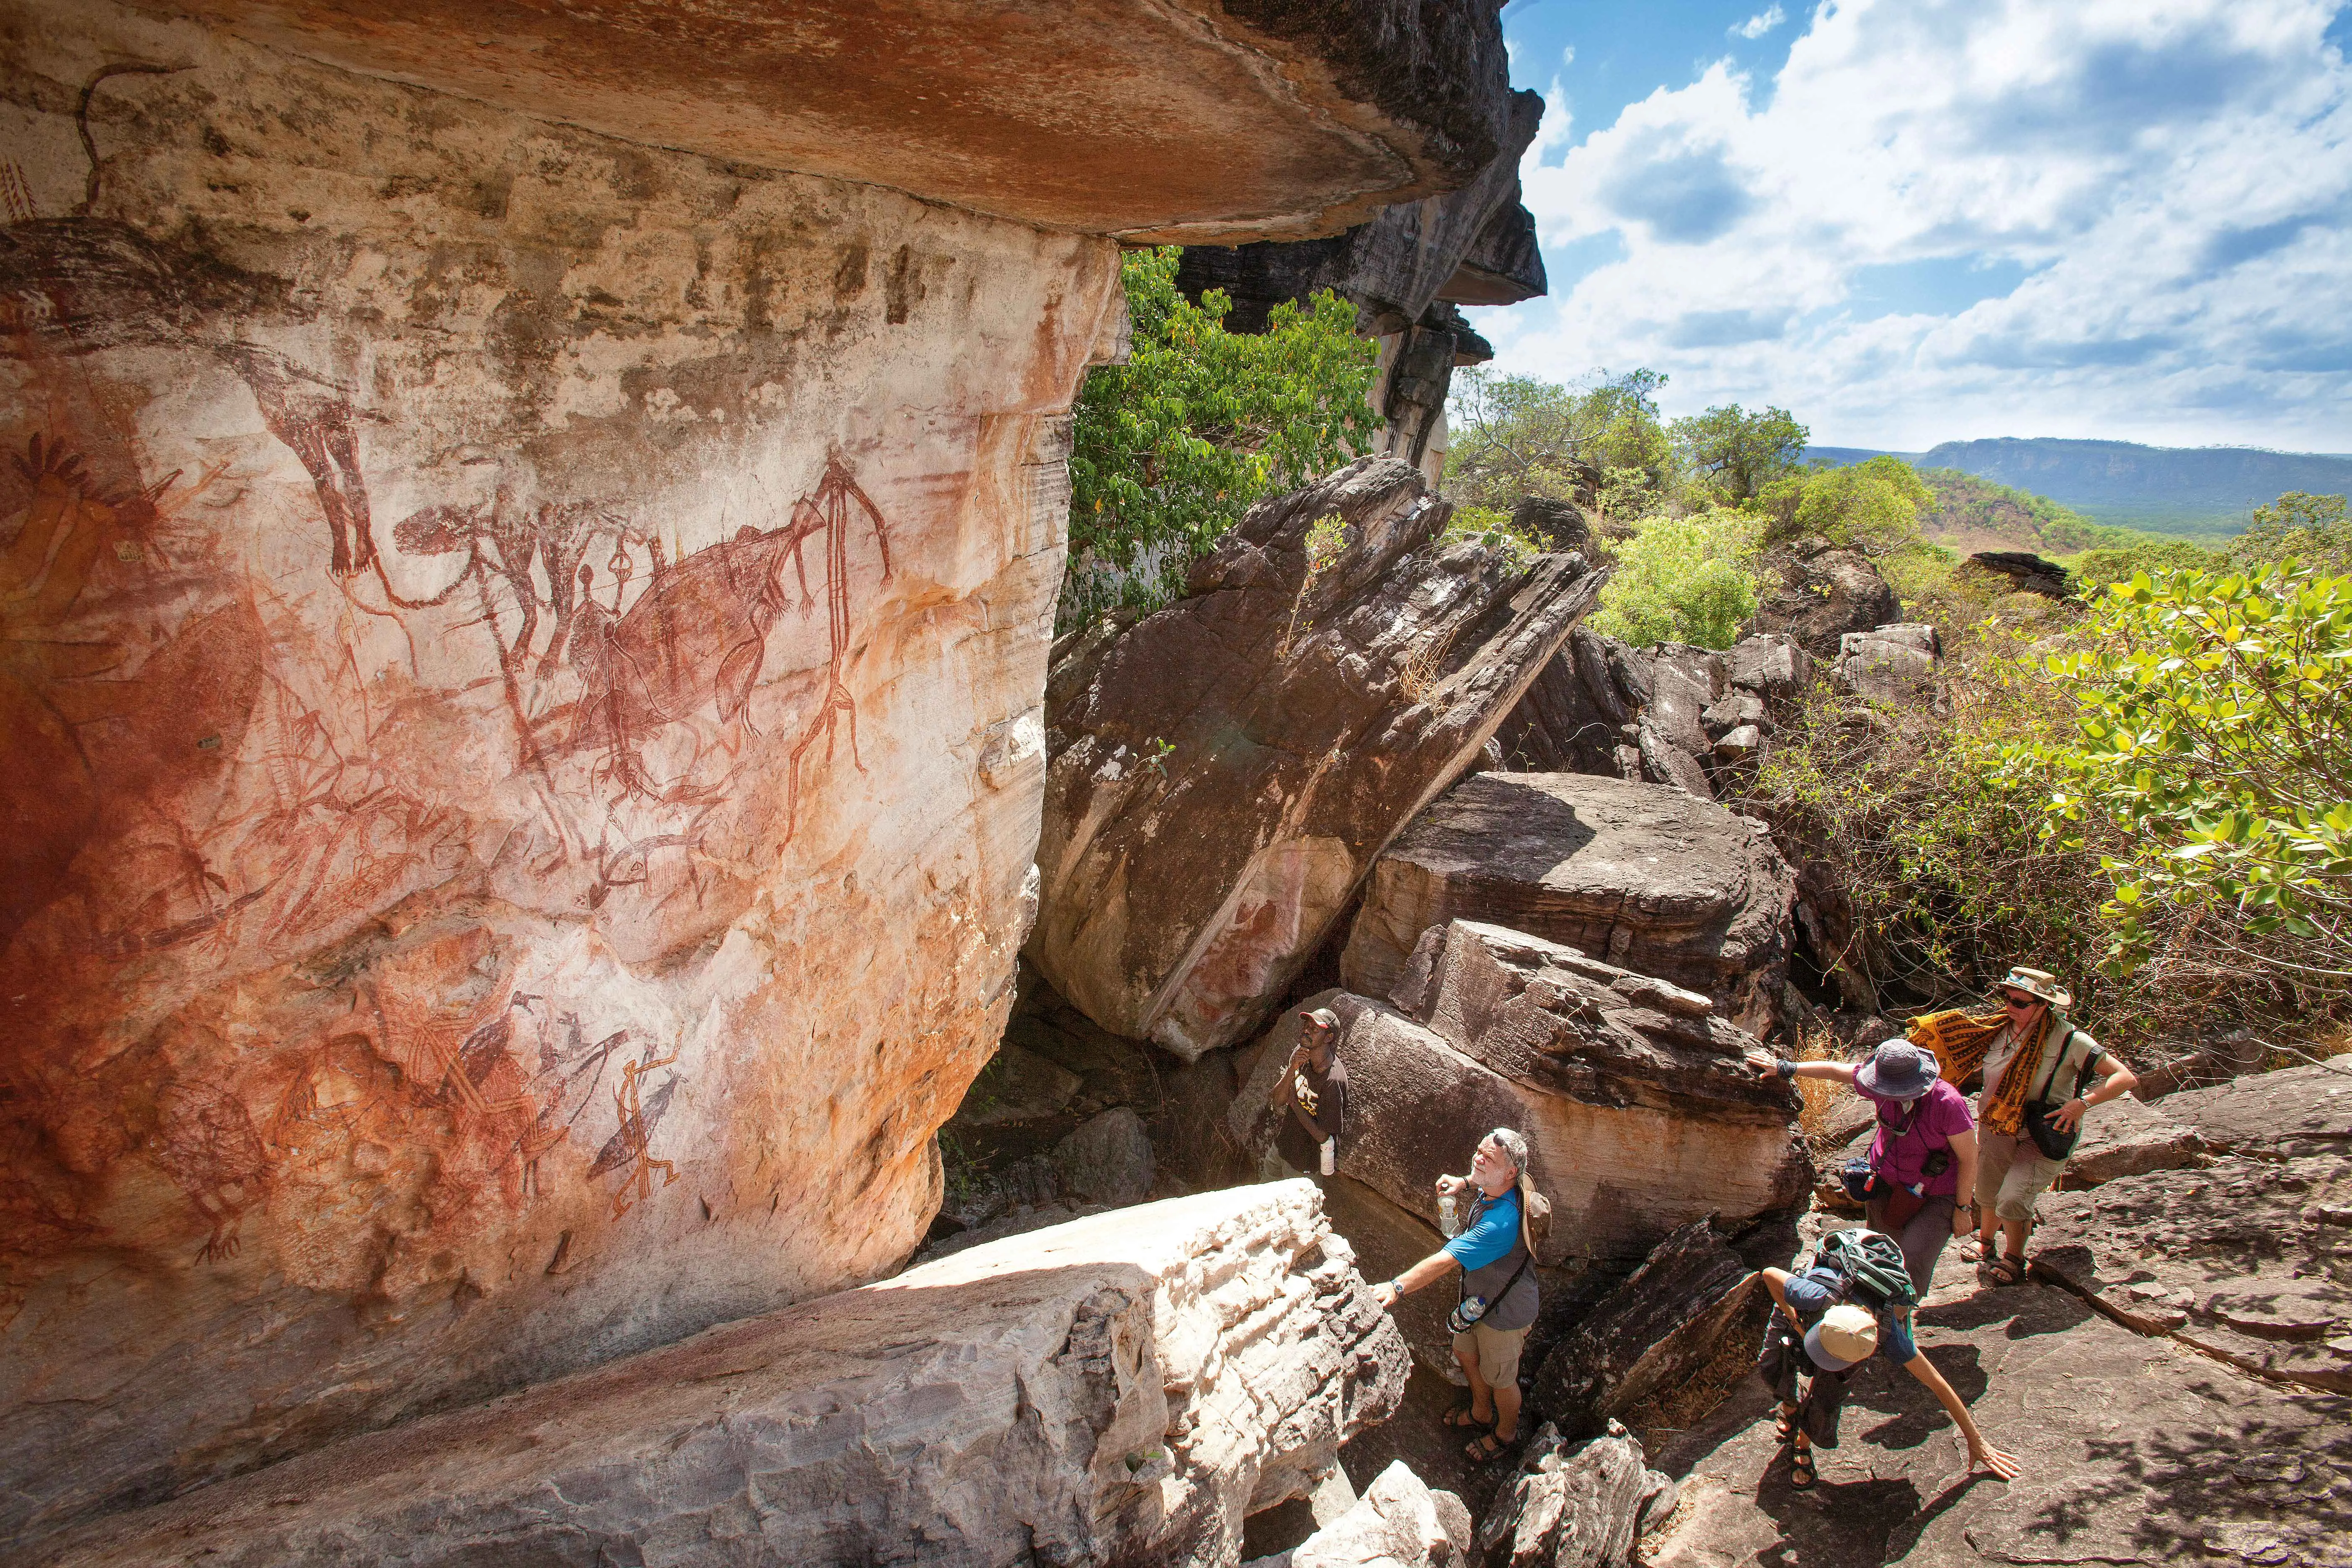 Guests viewing rock art in Kakadu National Park.